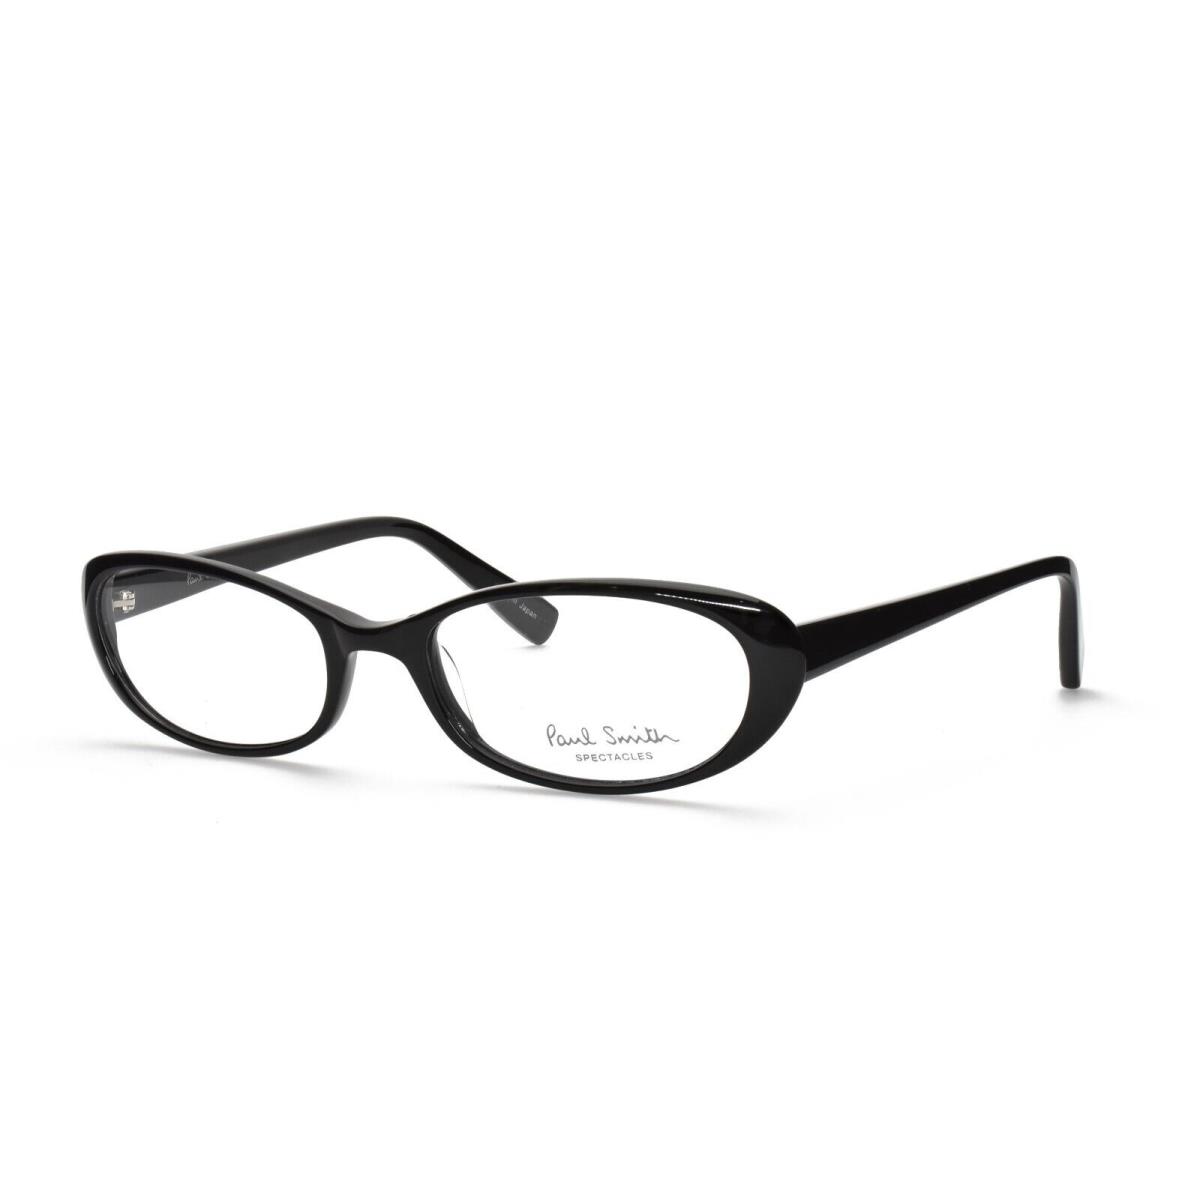 Paul Smith 278 OX 51-18-135 Black Vtg Vintage Eyeglasses Frames